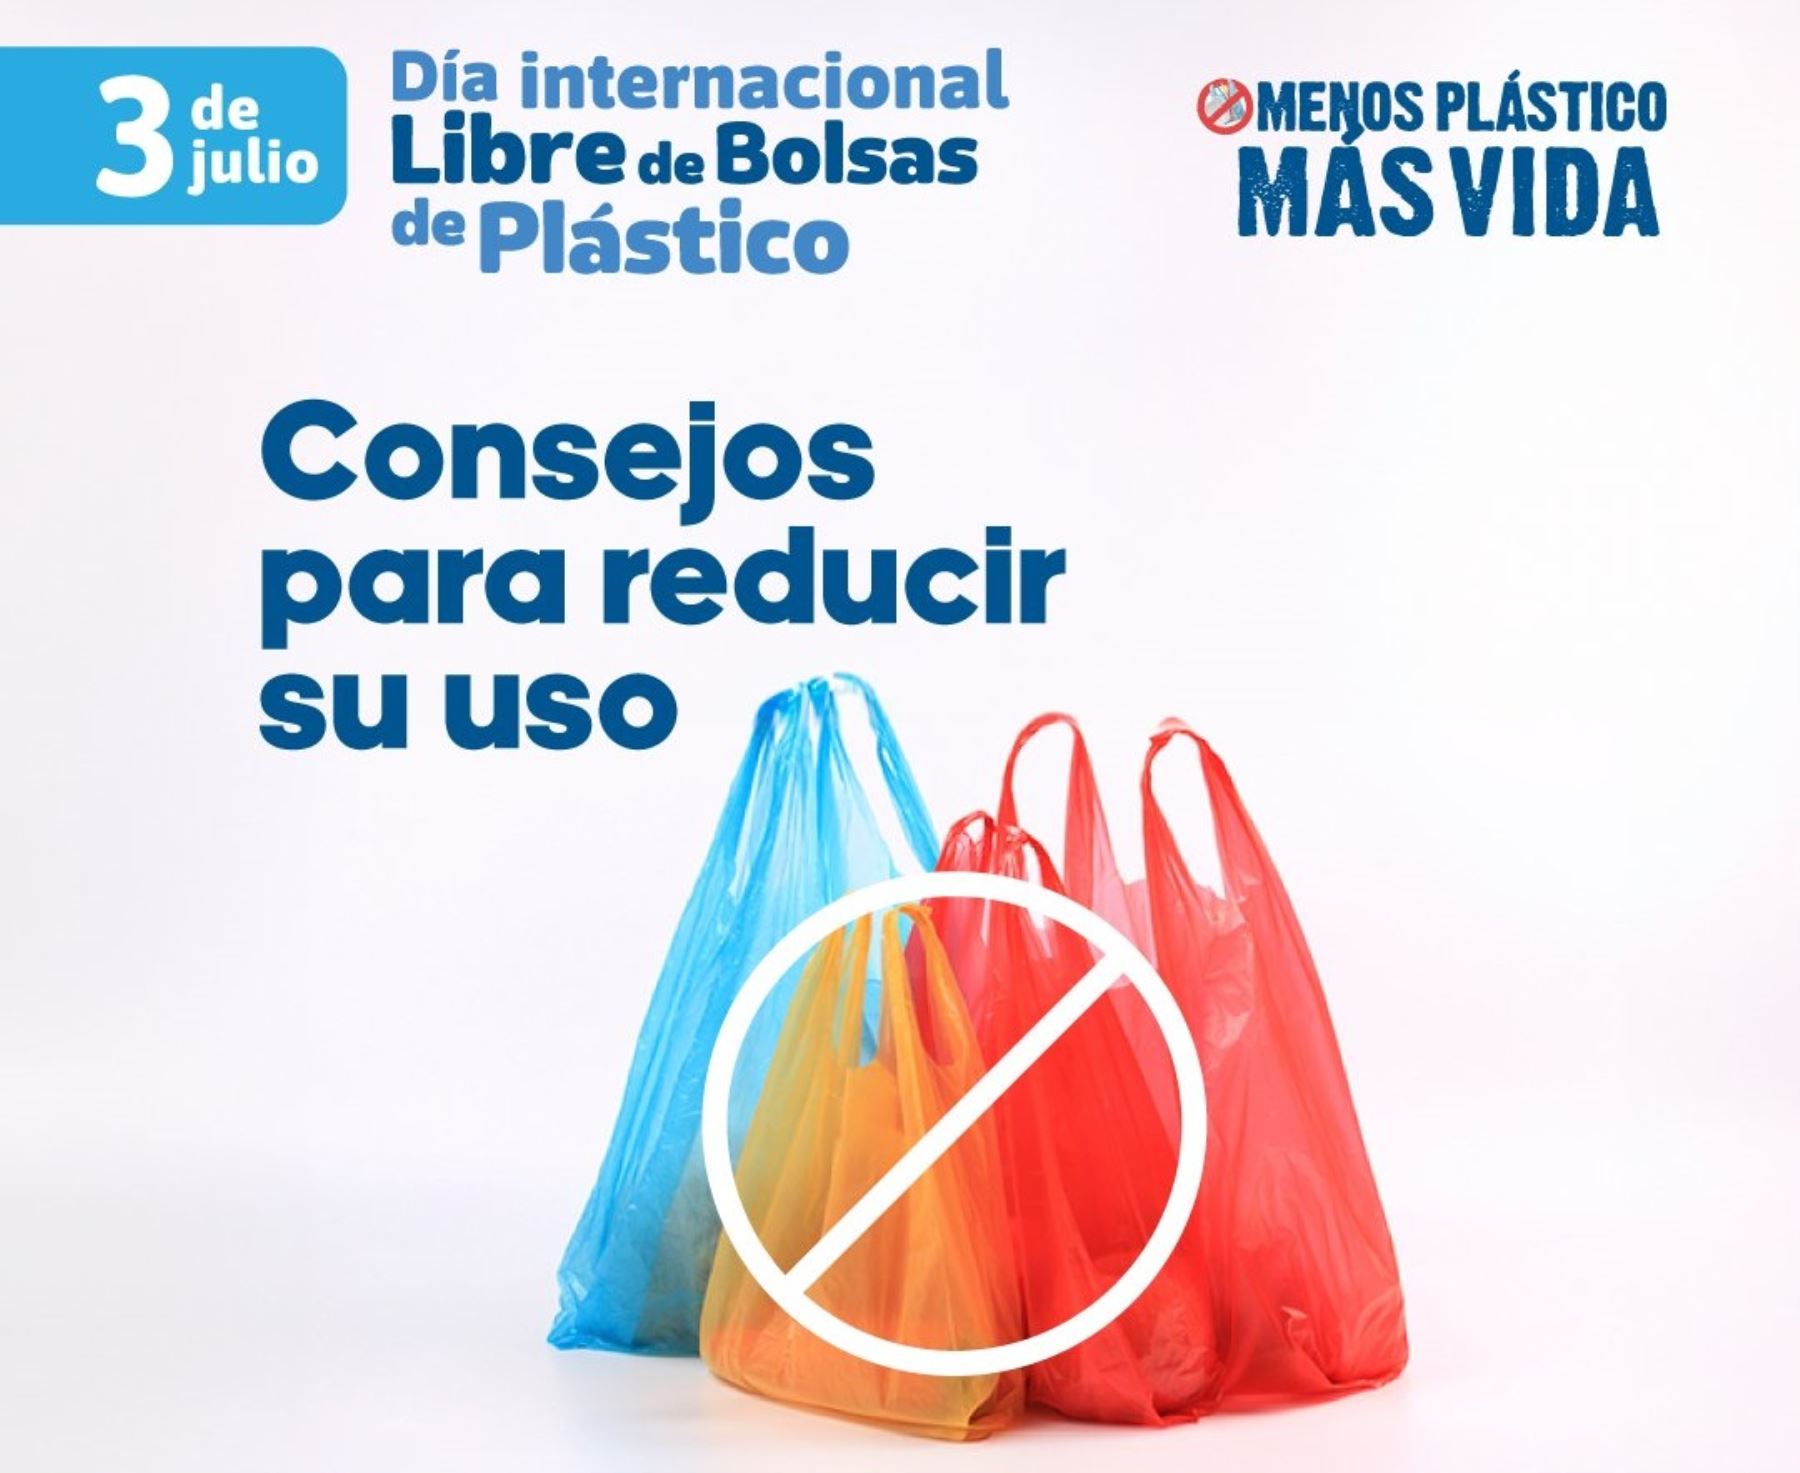 Día Internacional Libre de Bolsas de Plástico se celebra hoy 3 de julio.